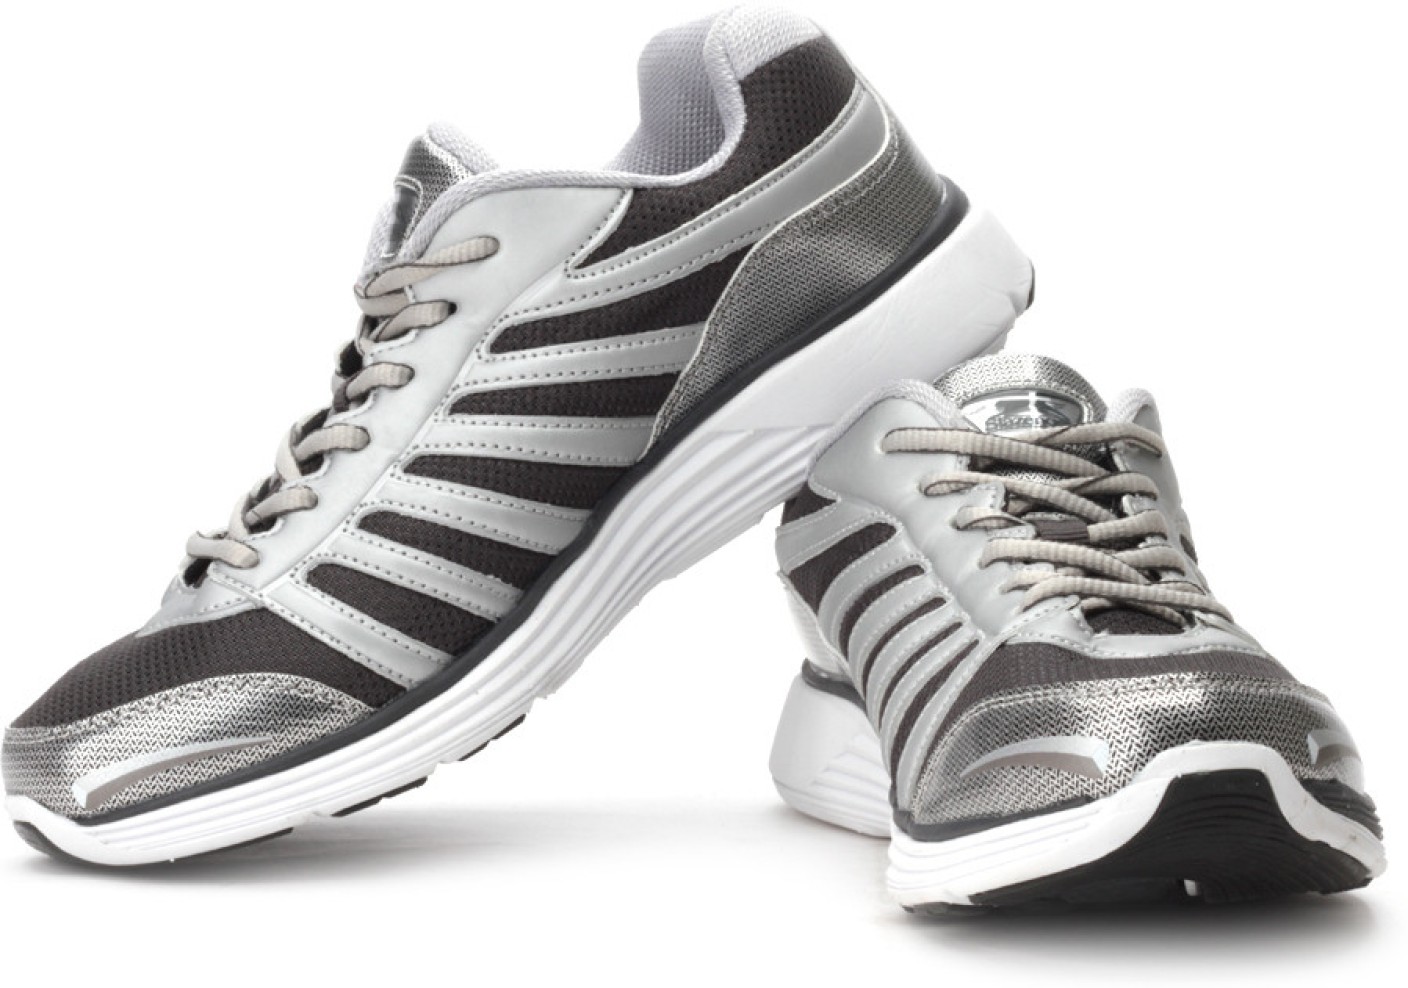 Slazenger Spencer Running Shoes For Men - Buy Grey, Silver Color ...